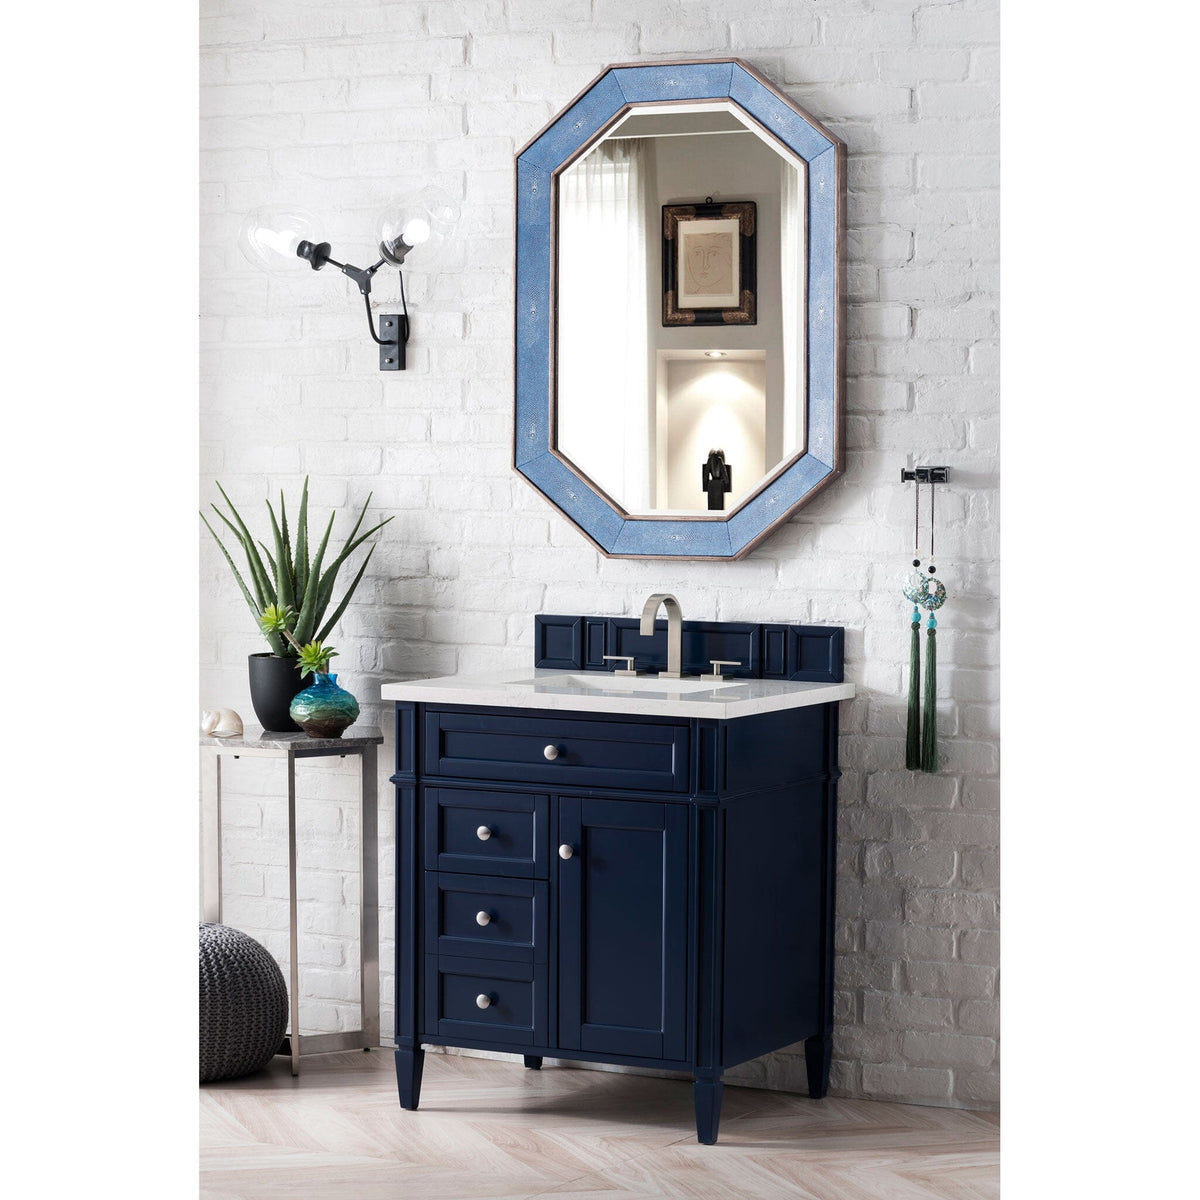 30" Brittany Single Bathroom Vanity, Victory Blue